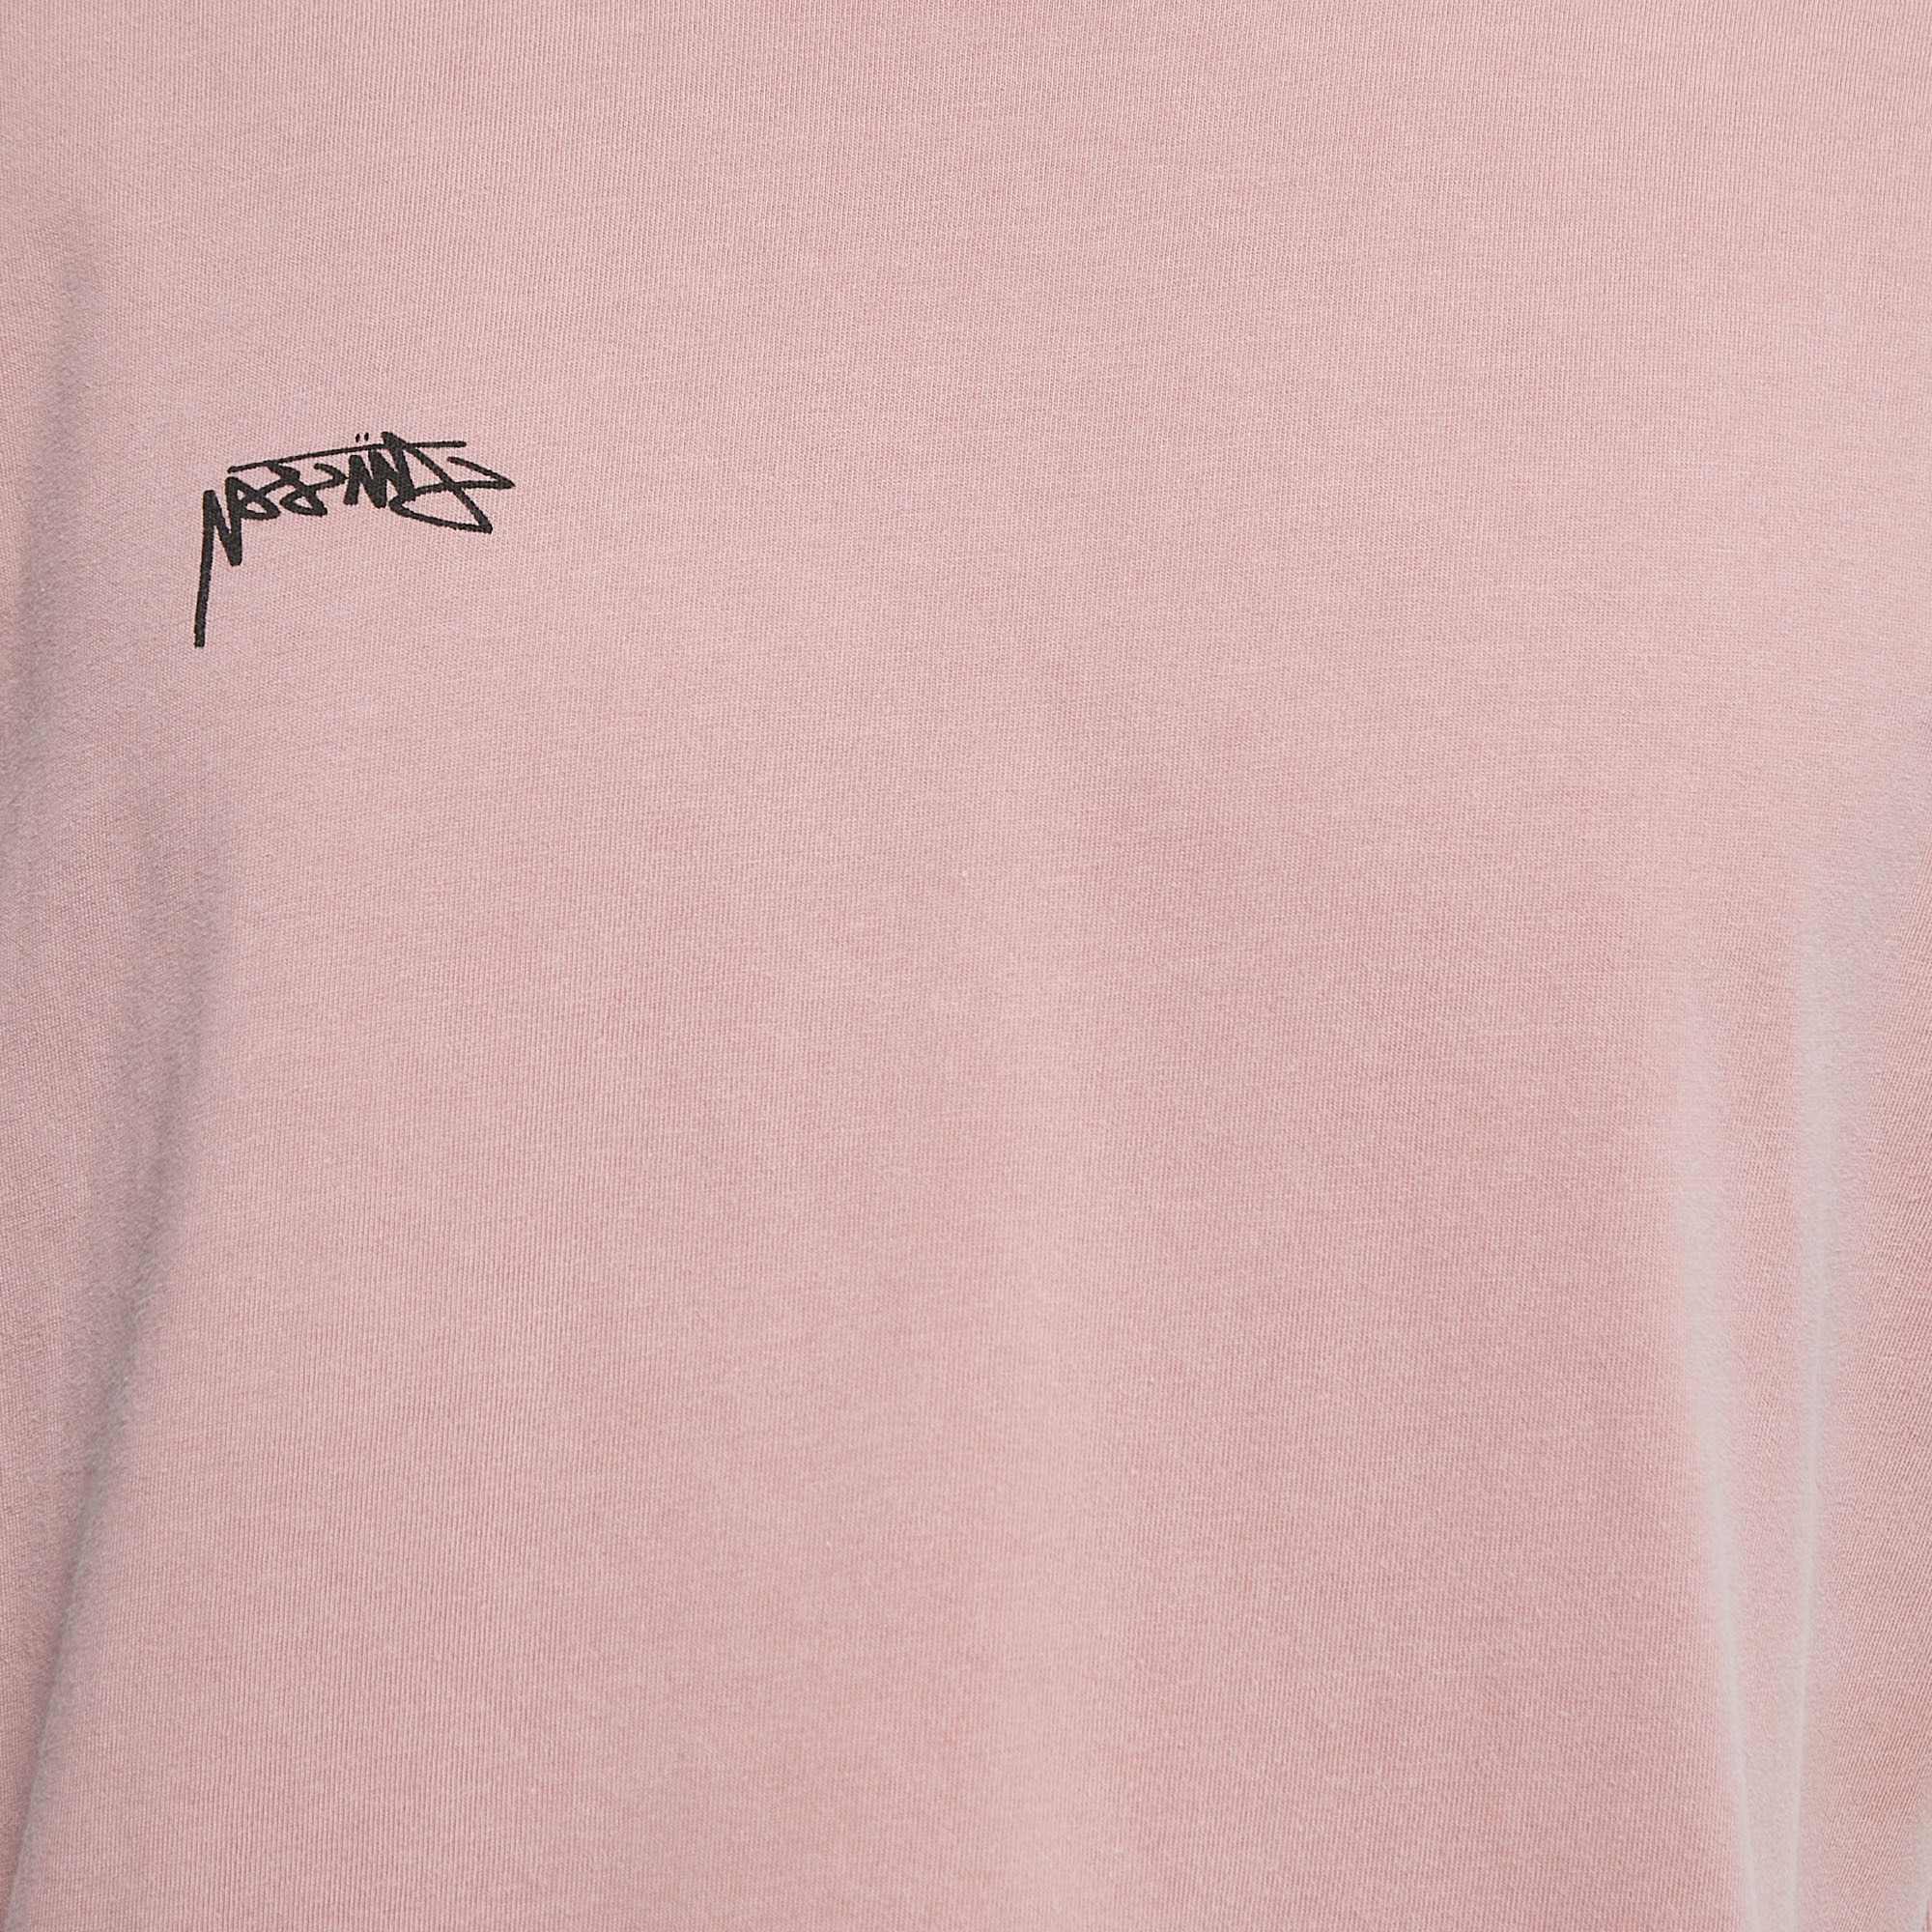 Stussy Pink Logo Print Cotton Crew Neck T-Shirt M